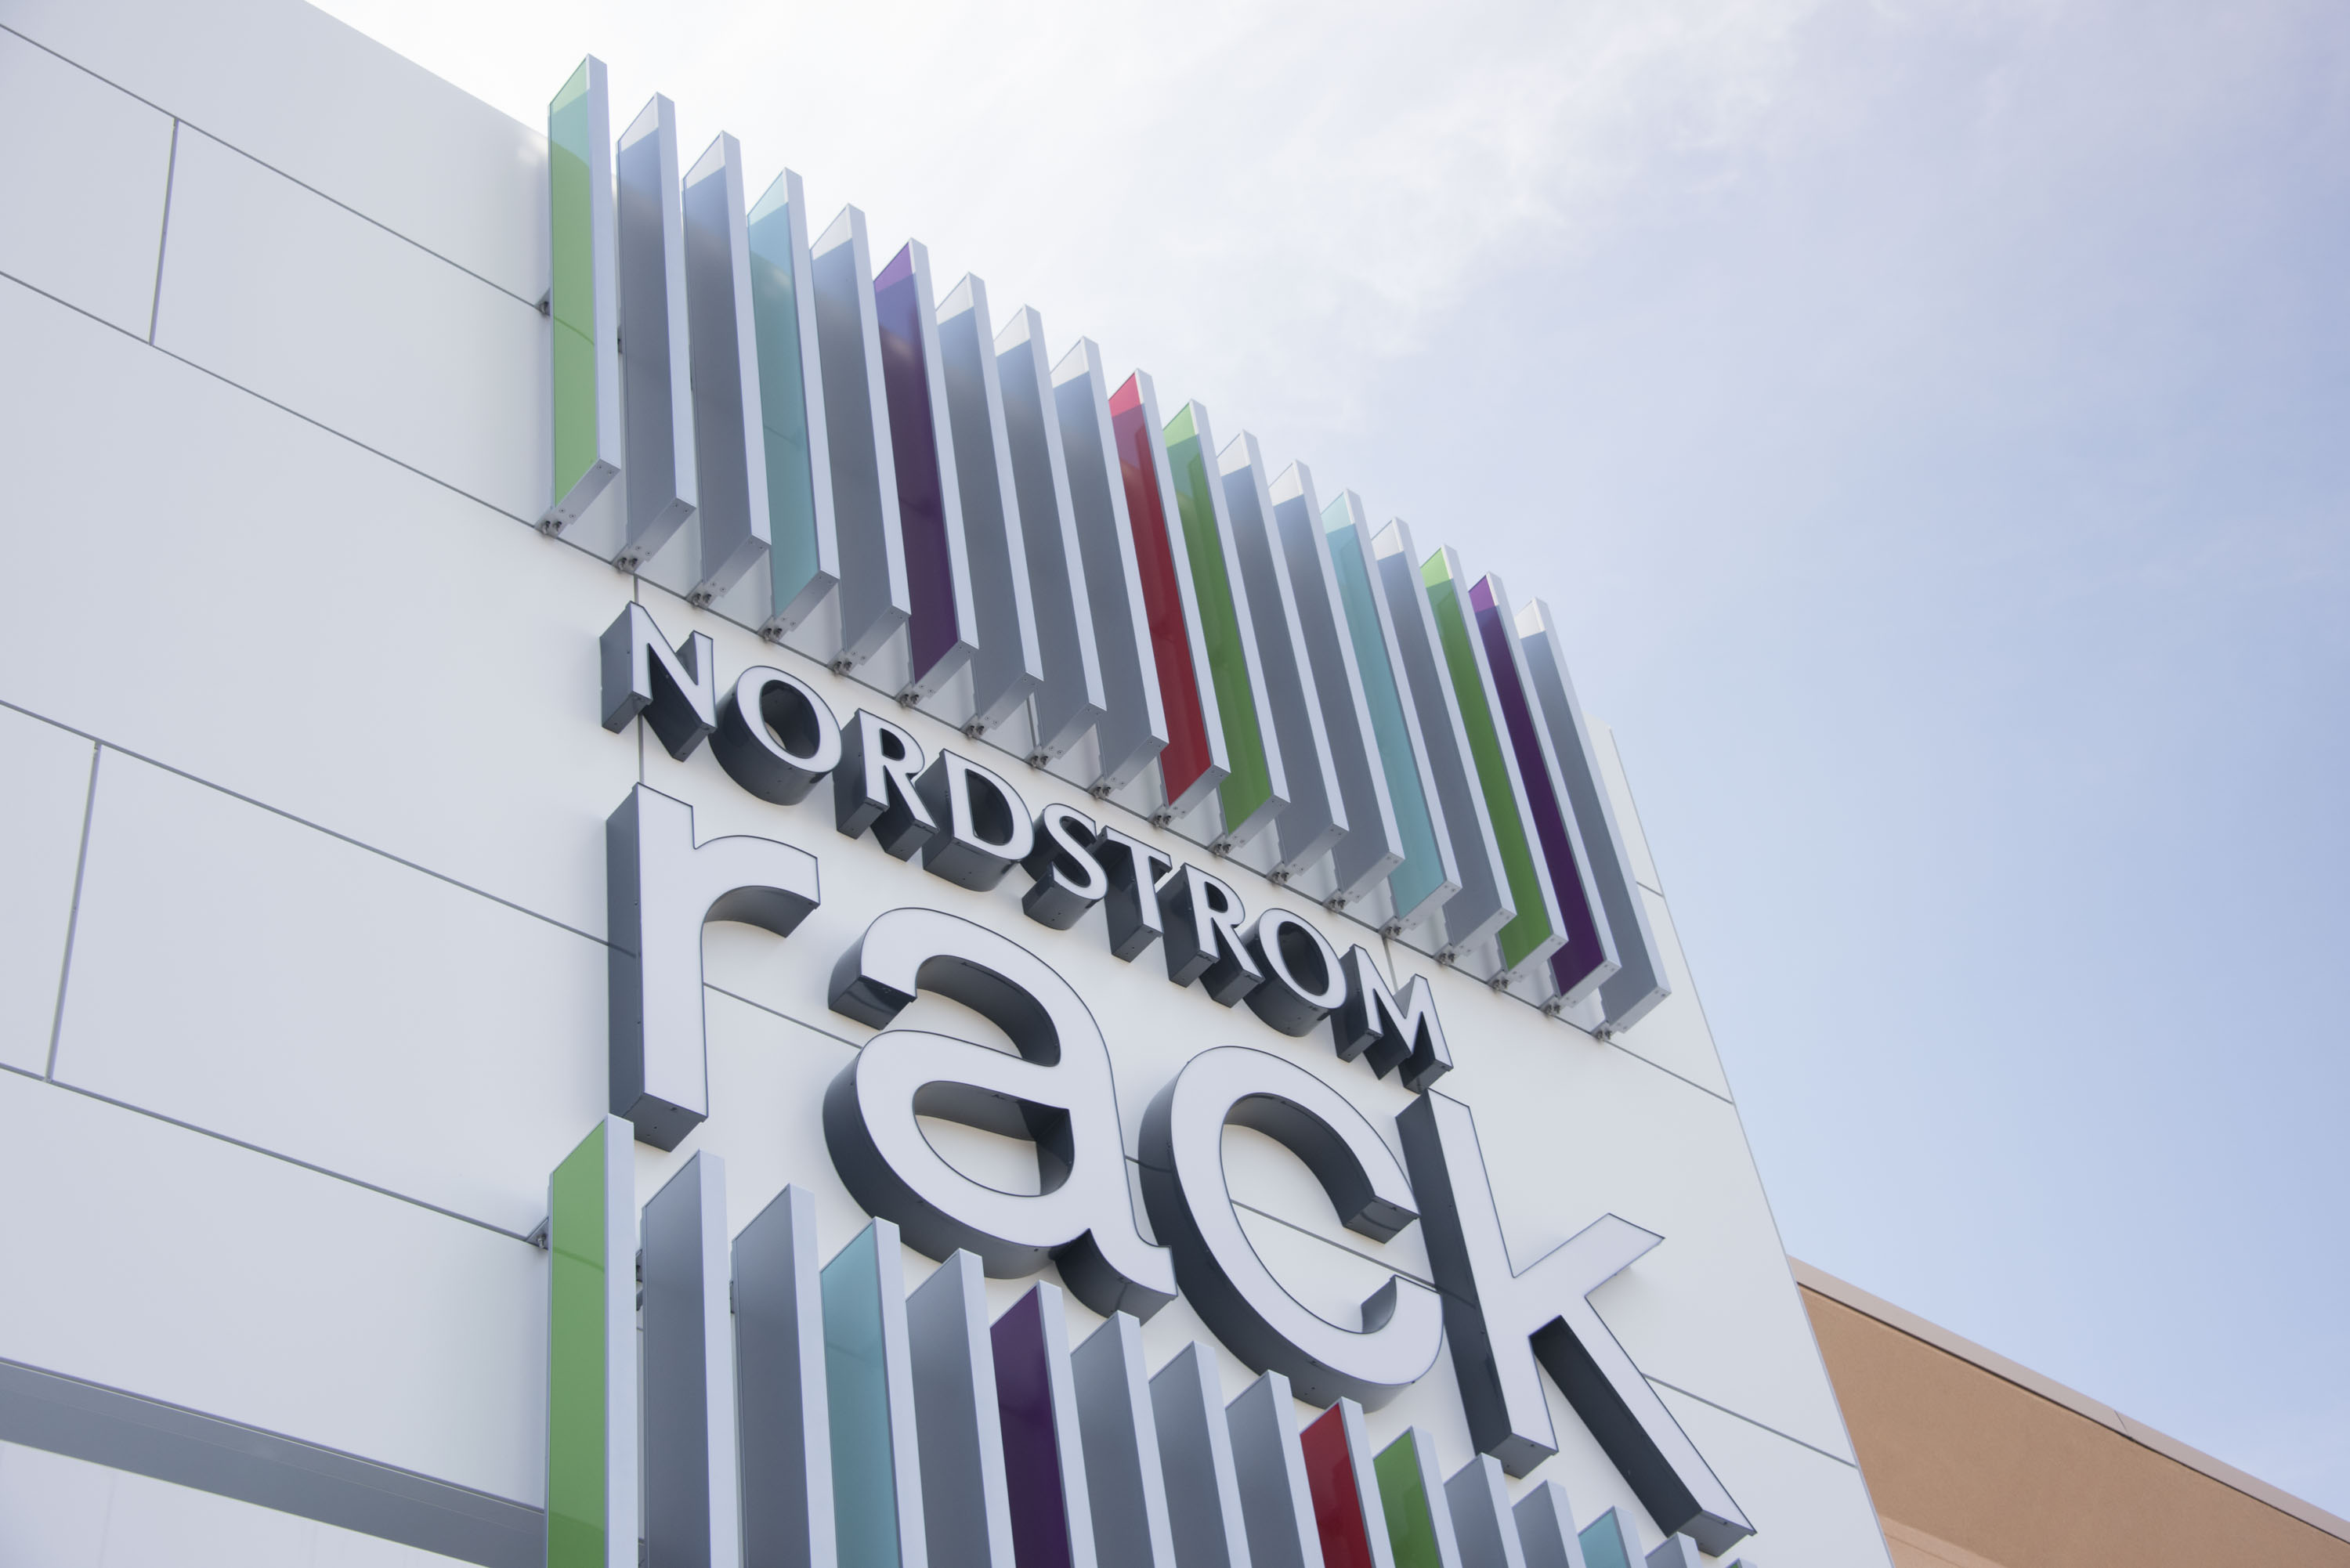 Nordstrom Rack to open location in Brandon